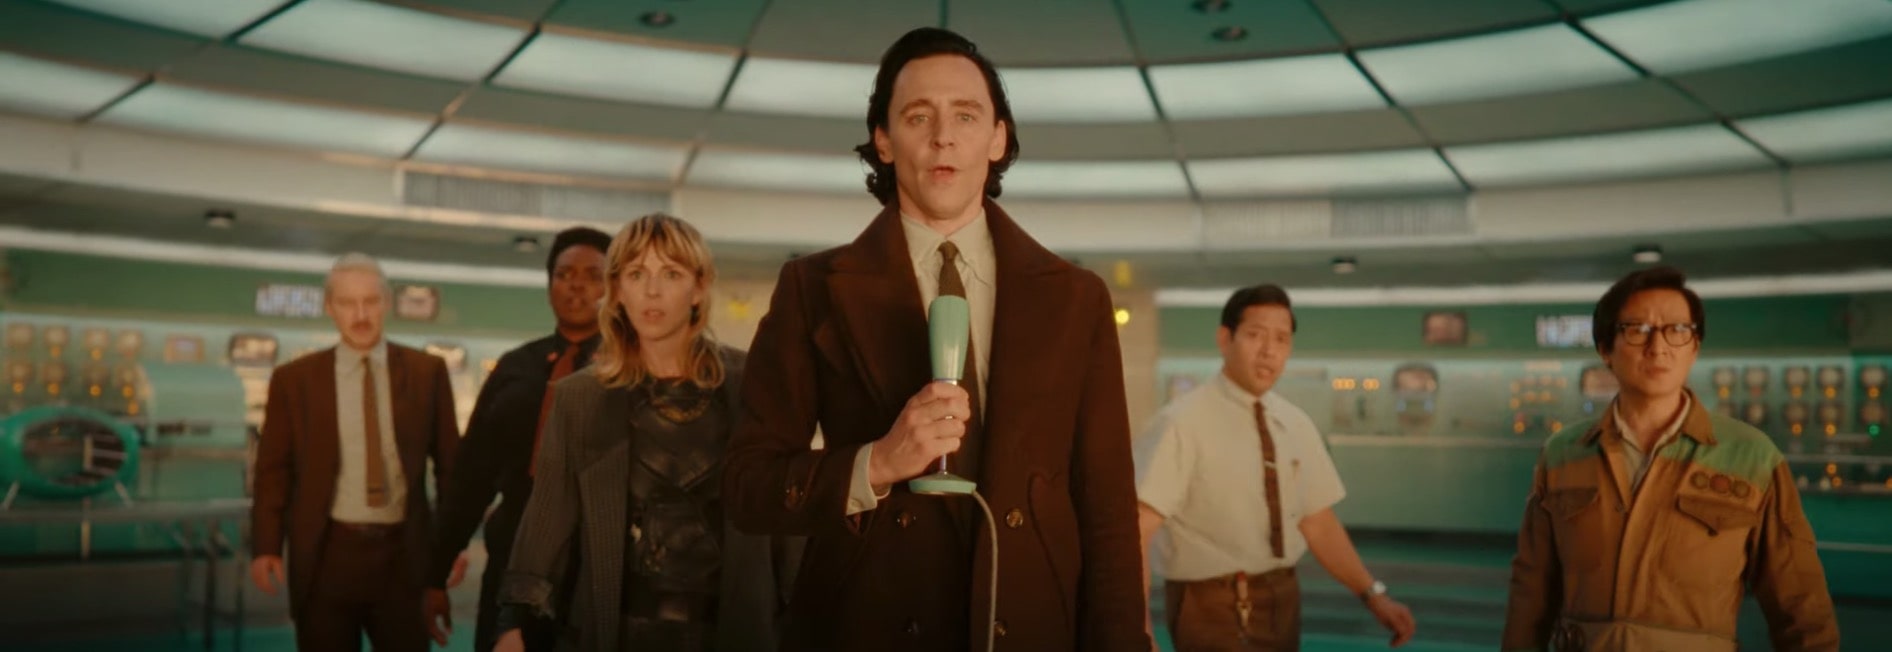 'Loki' season 2 trailer reveals time travel hijinks